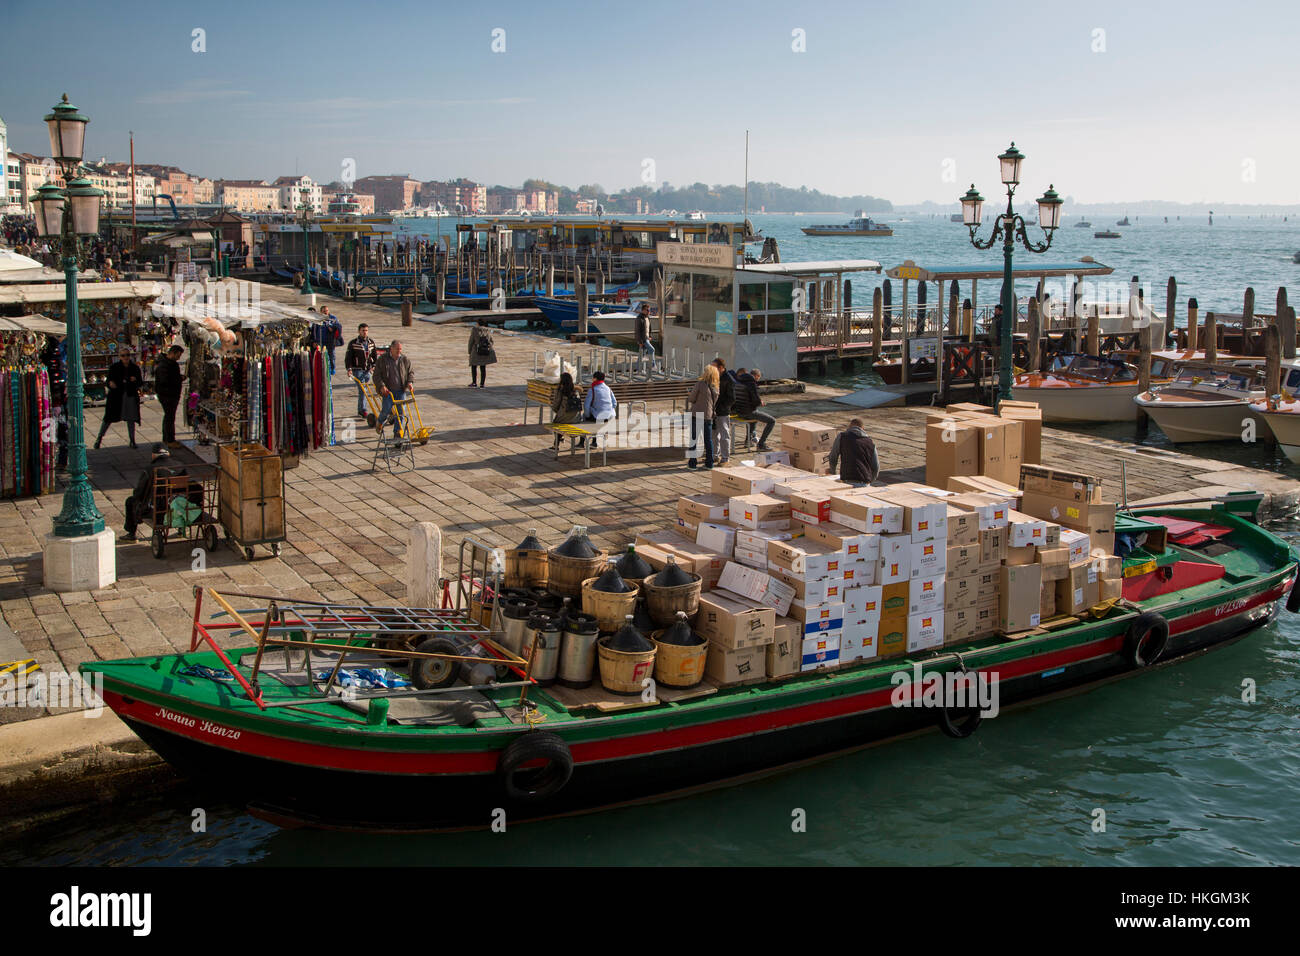 Lieferung Boot und Anbieter entlang der Uferpromenade, Venedig, Veneto, Italien Stockfoto